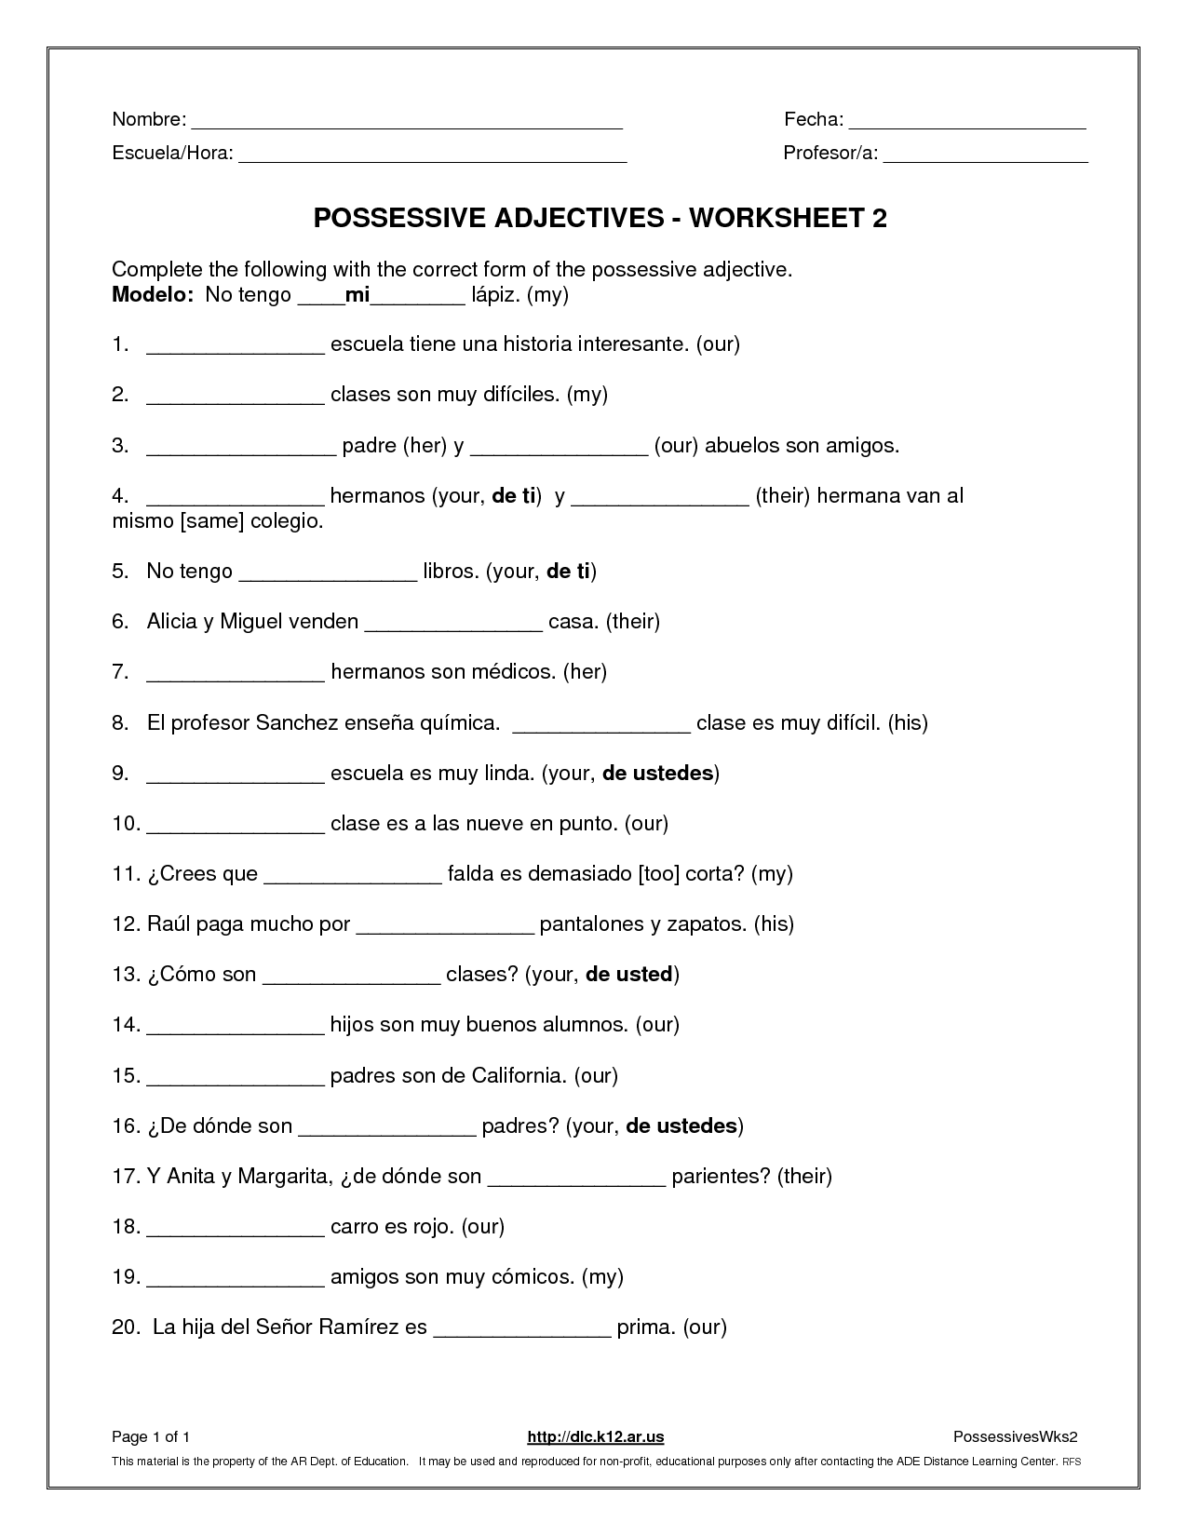 spanish-possessive-adjectives-worksheet-pdf-adjectiveworksheets